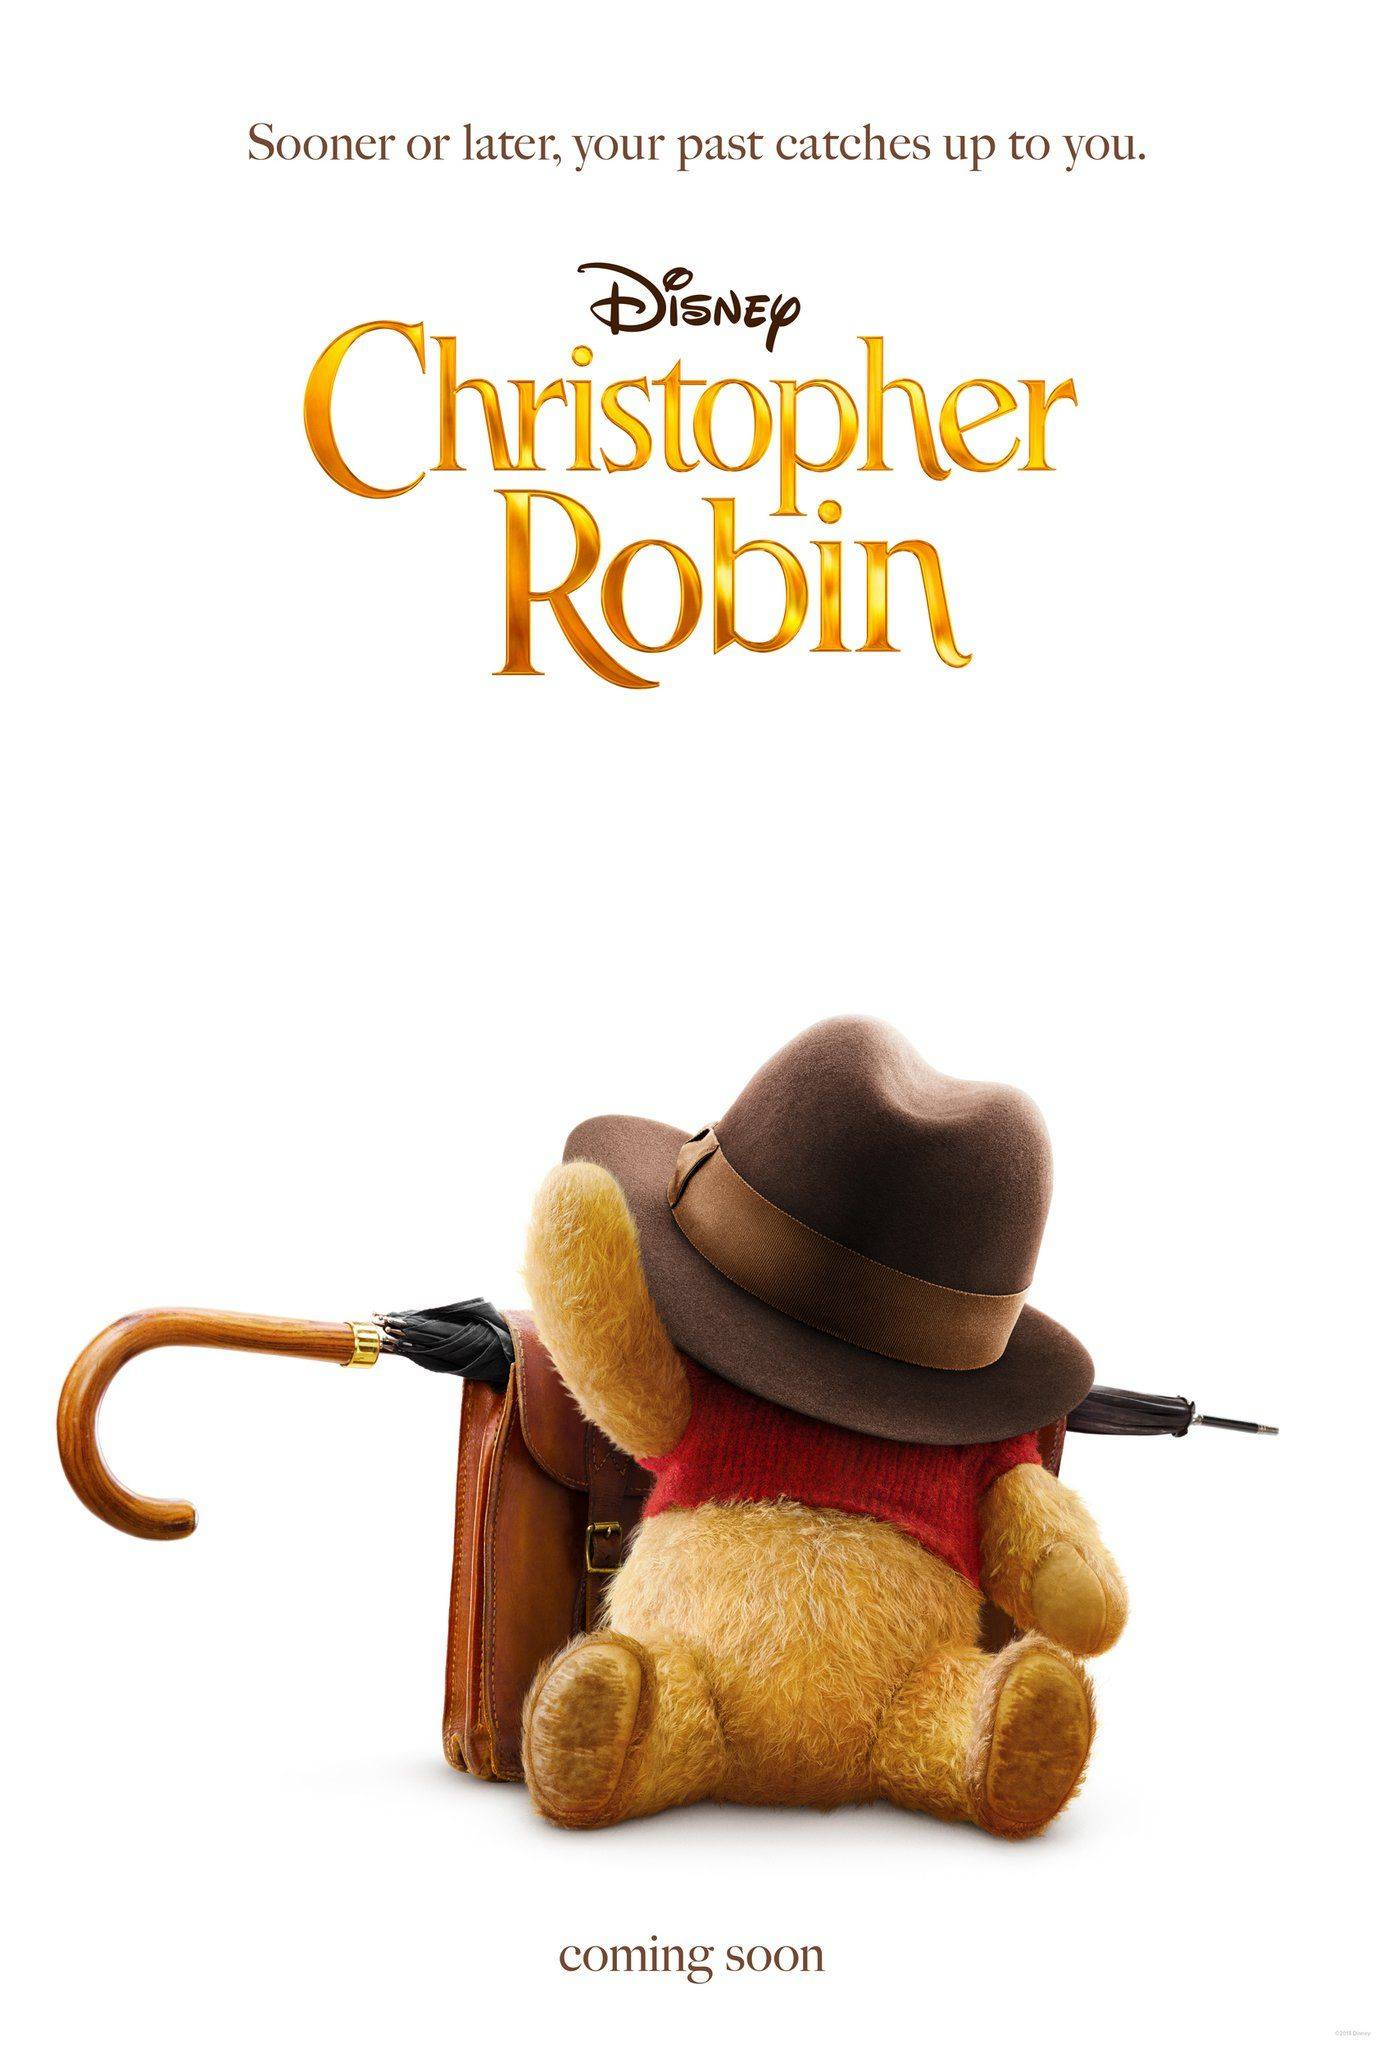 christopher robin, cinematographe